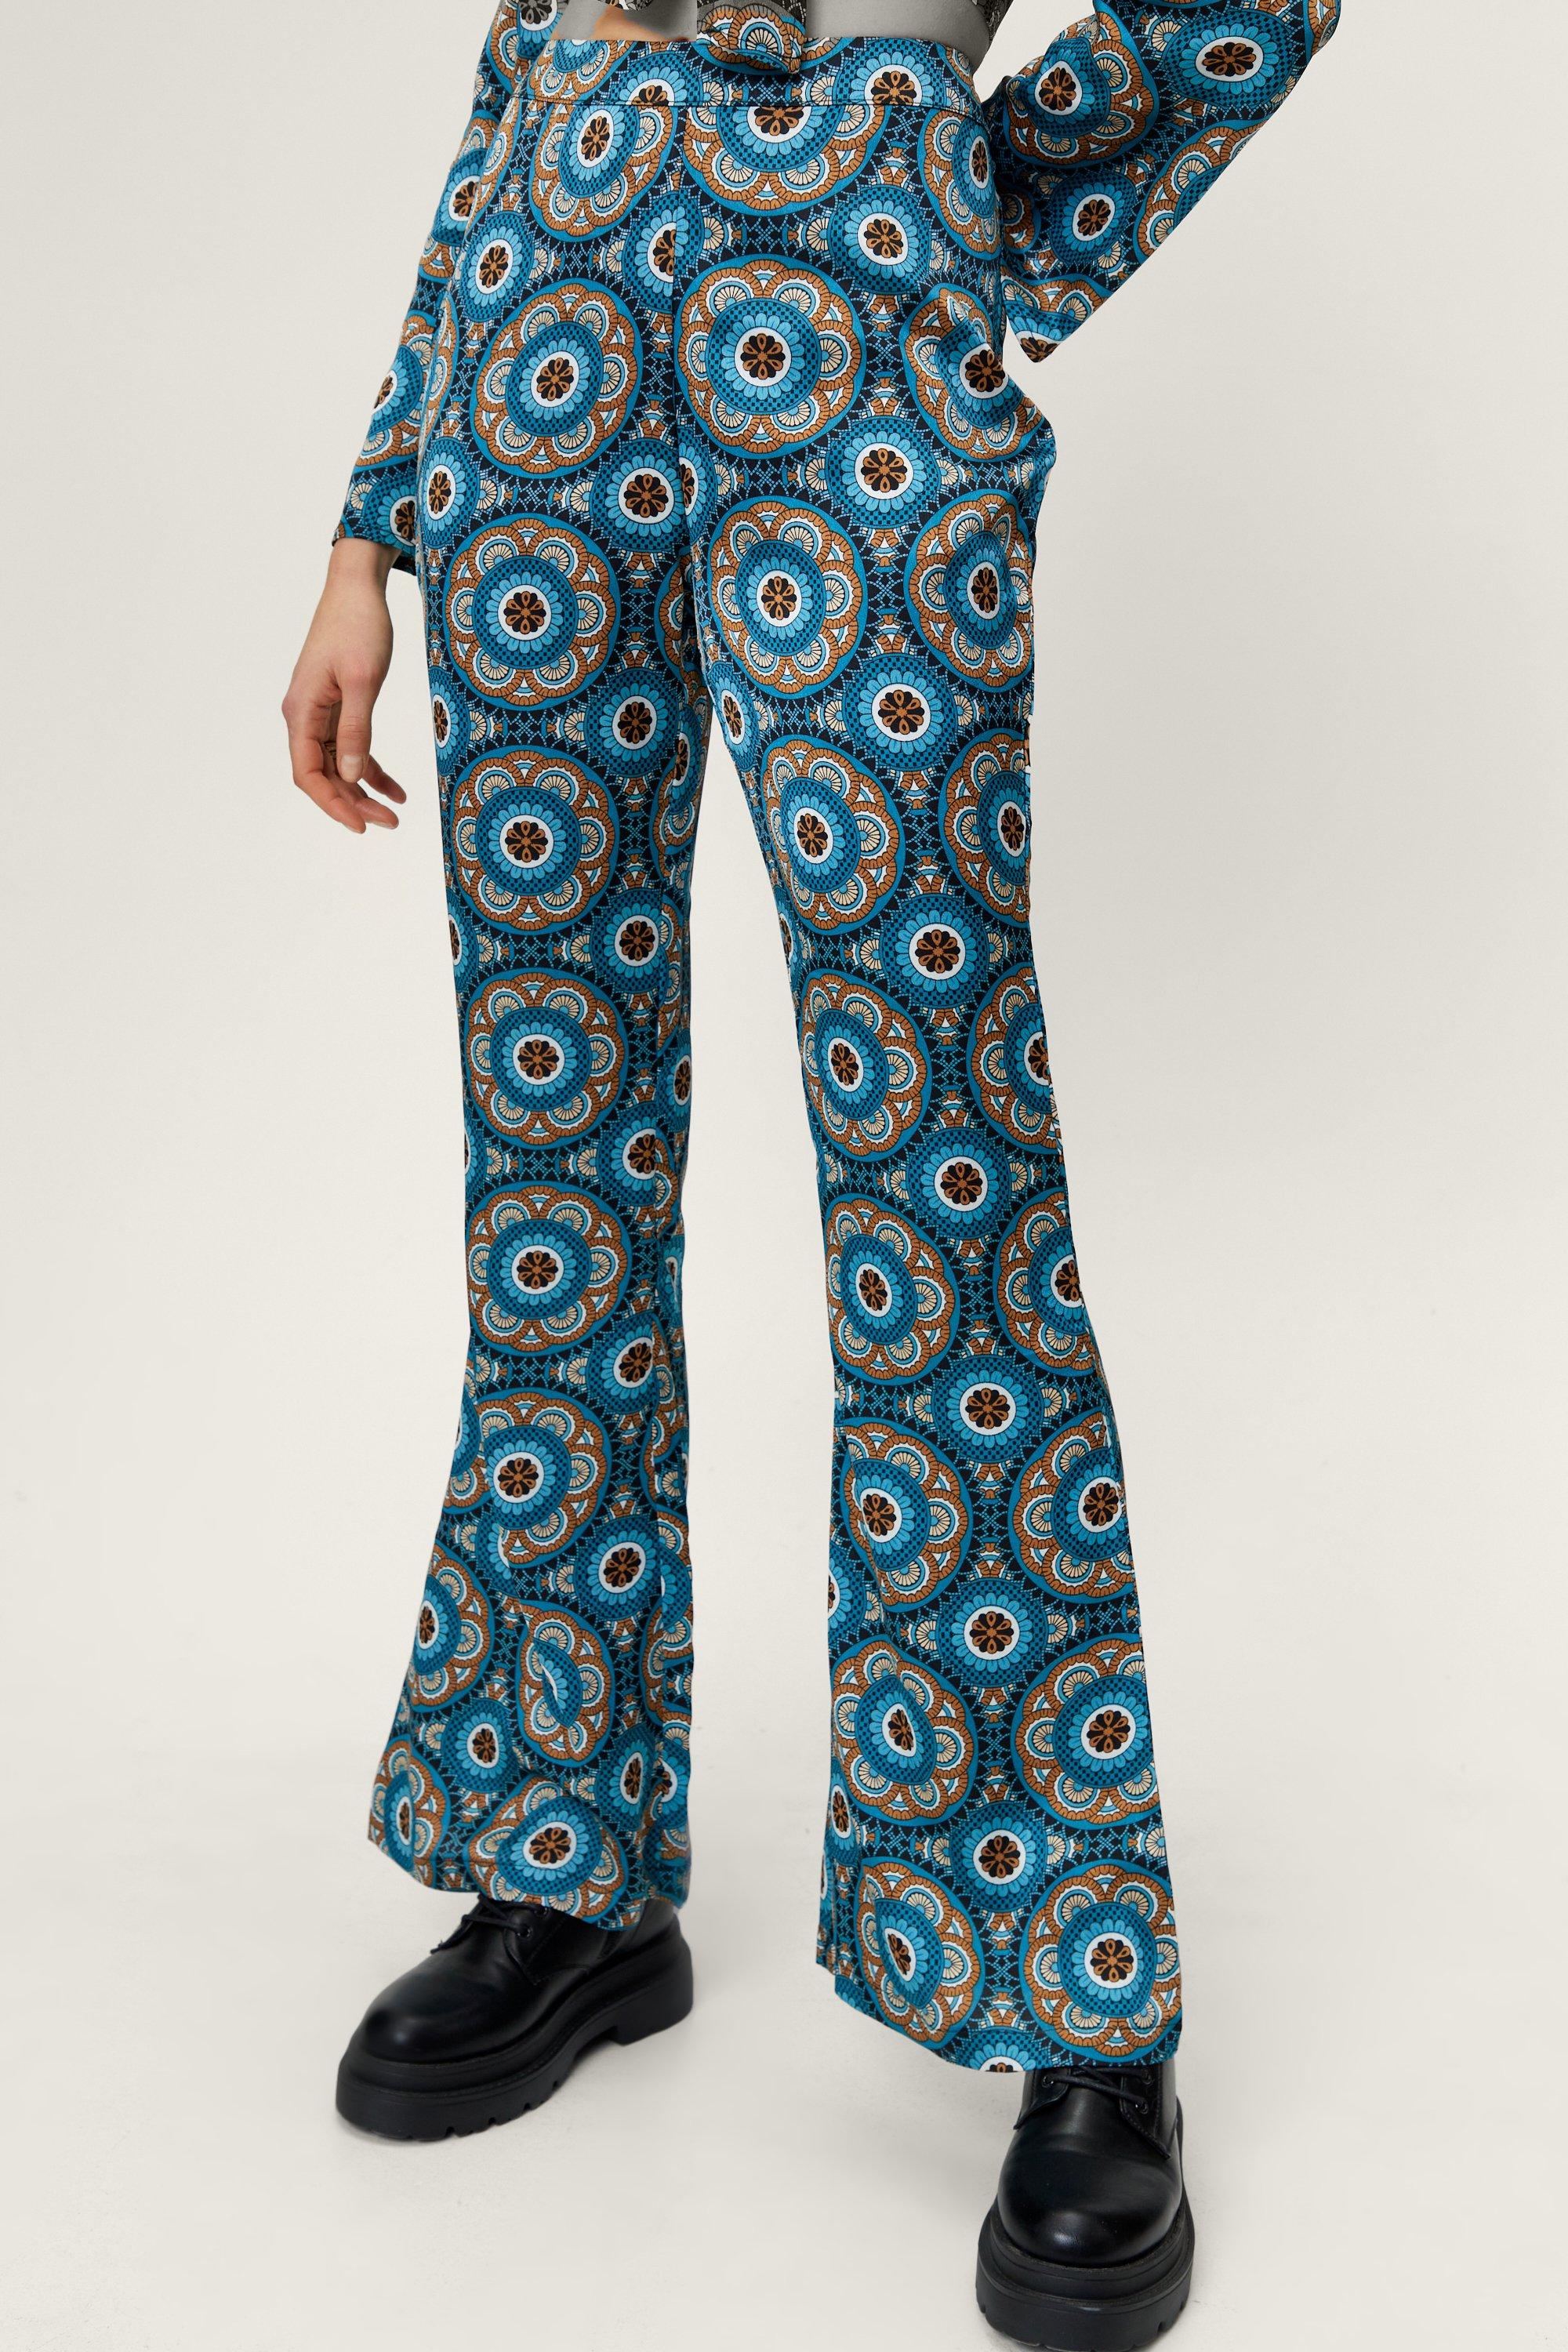 https://media.nastygal.com/i/nastygal/bgg02018_blue_xl_1/blue-retro-print-wide-leg-pants